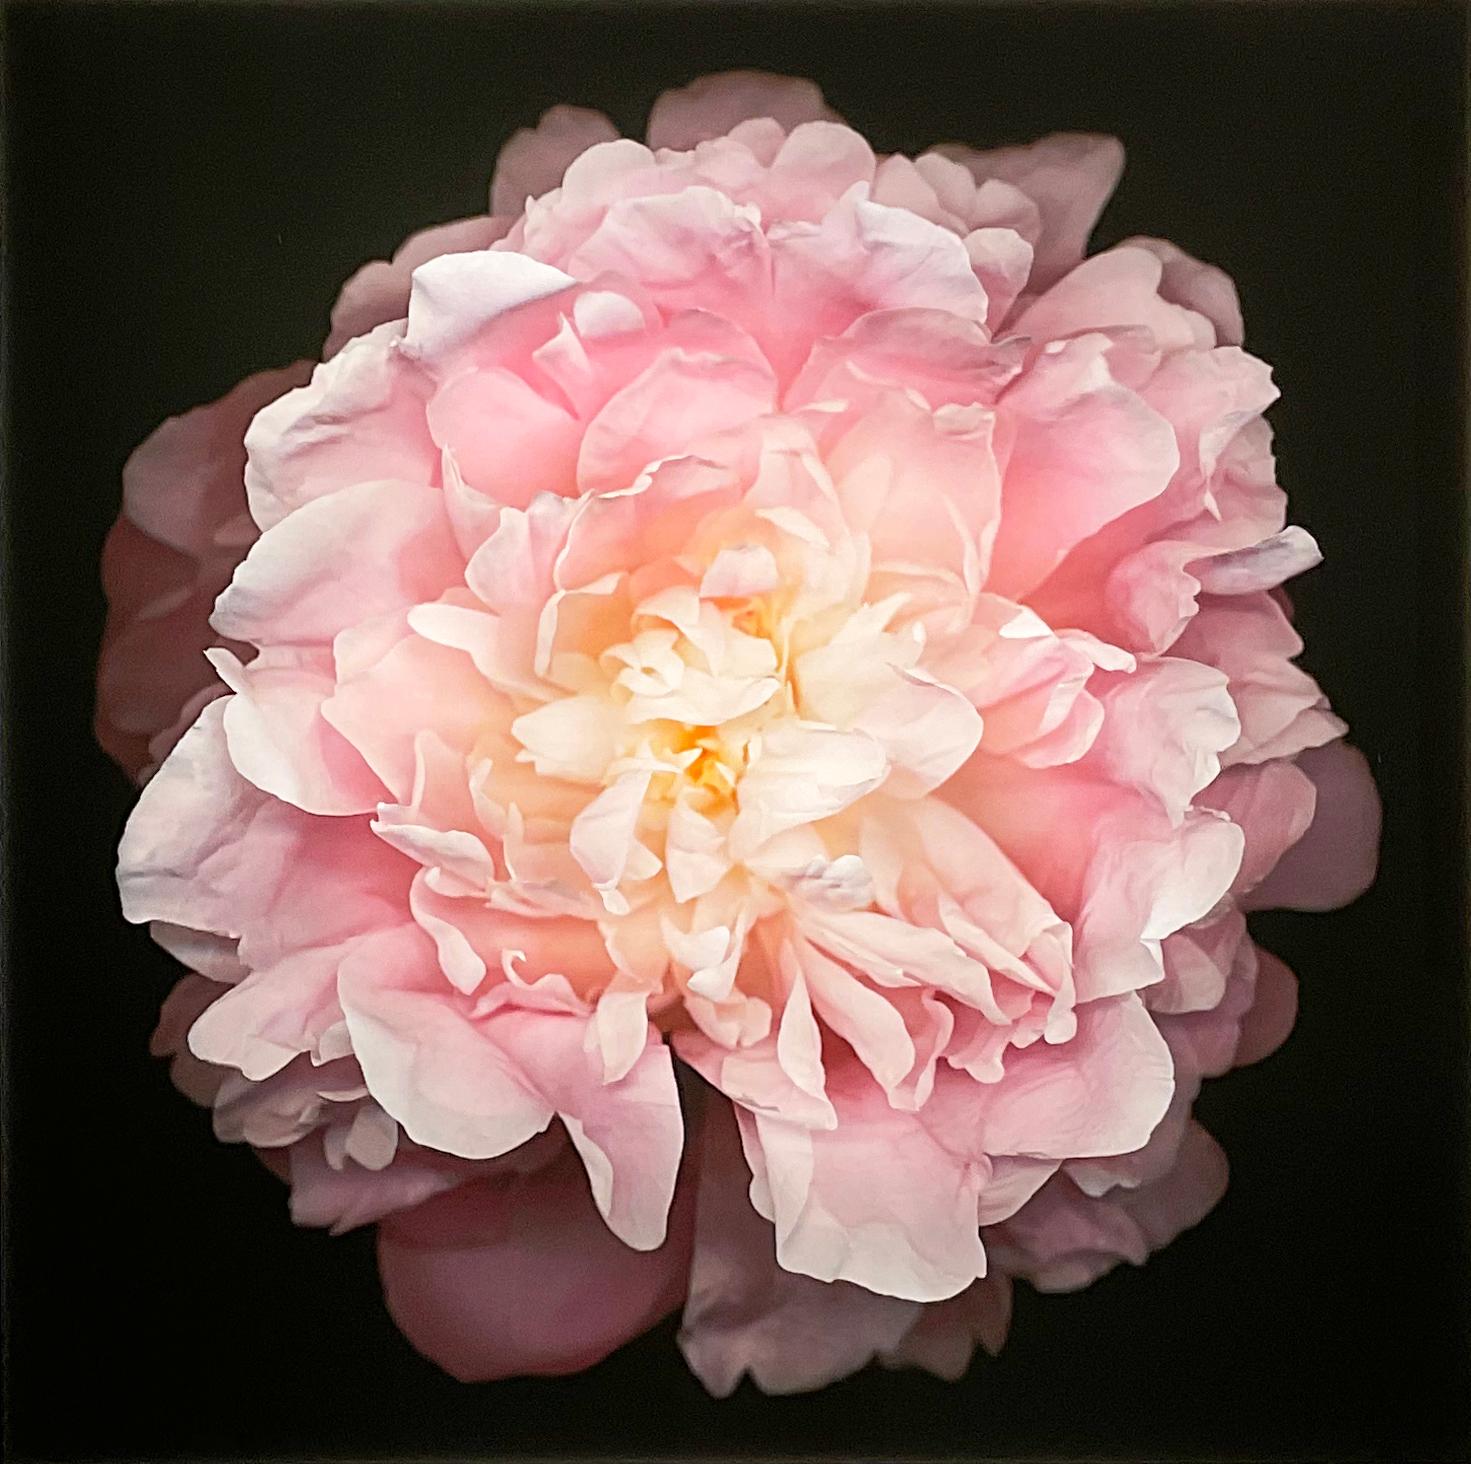 Chad Kleitsch Still-Life Photograph - No. 47 (Framed Flower Still Life Photograph of a Pink Peony on Black) 